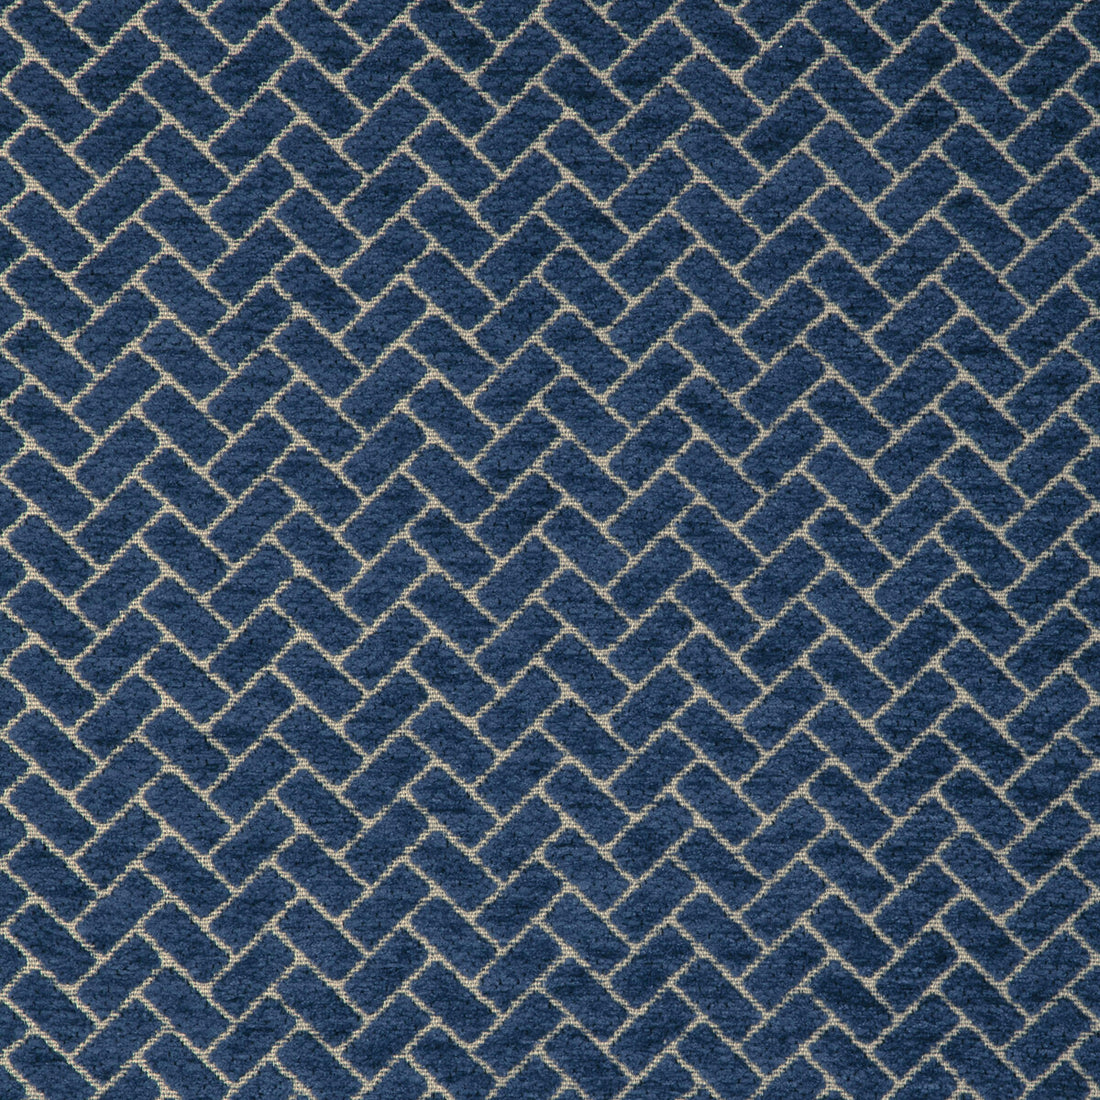 Kravet Smart fabric in 37003-5 color - pattern 37003.5.0 - by Kravet Smart in the Pavilion collection